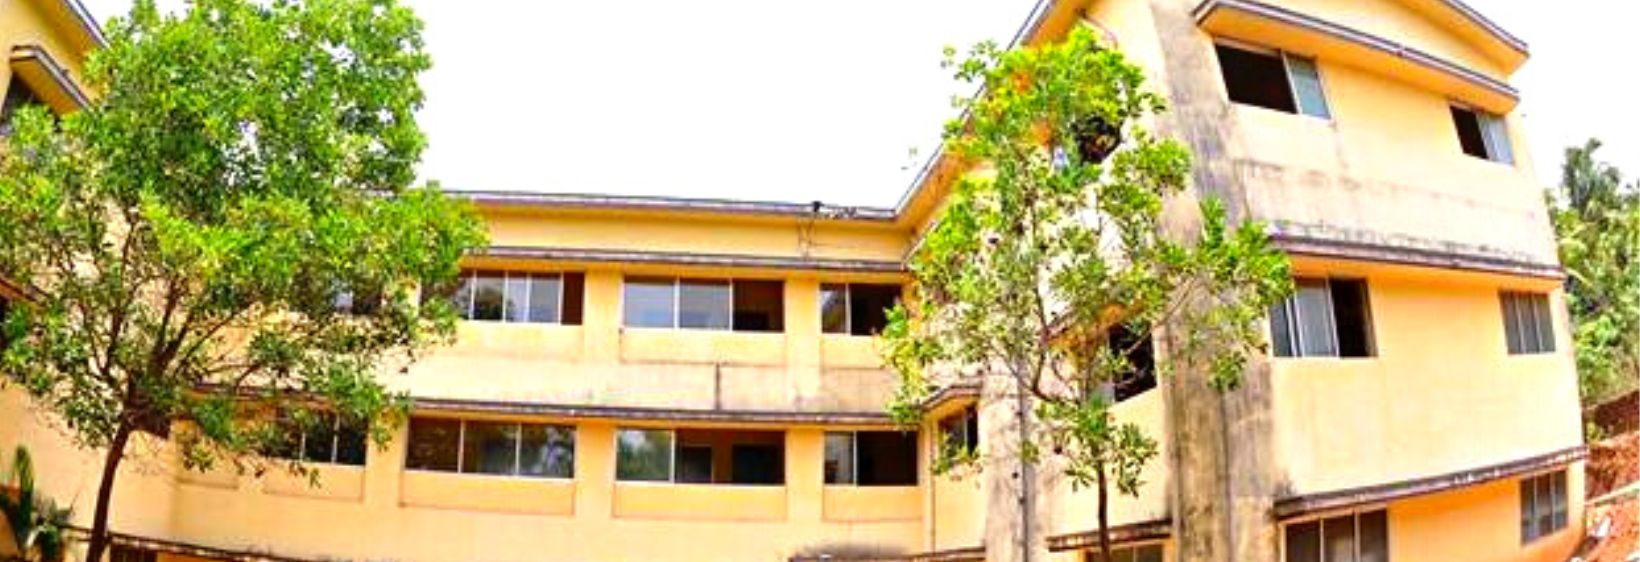 City College of Nursing - Mangalore, Dakshina Kannada